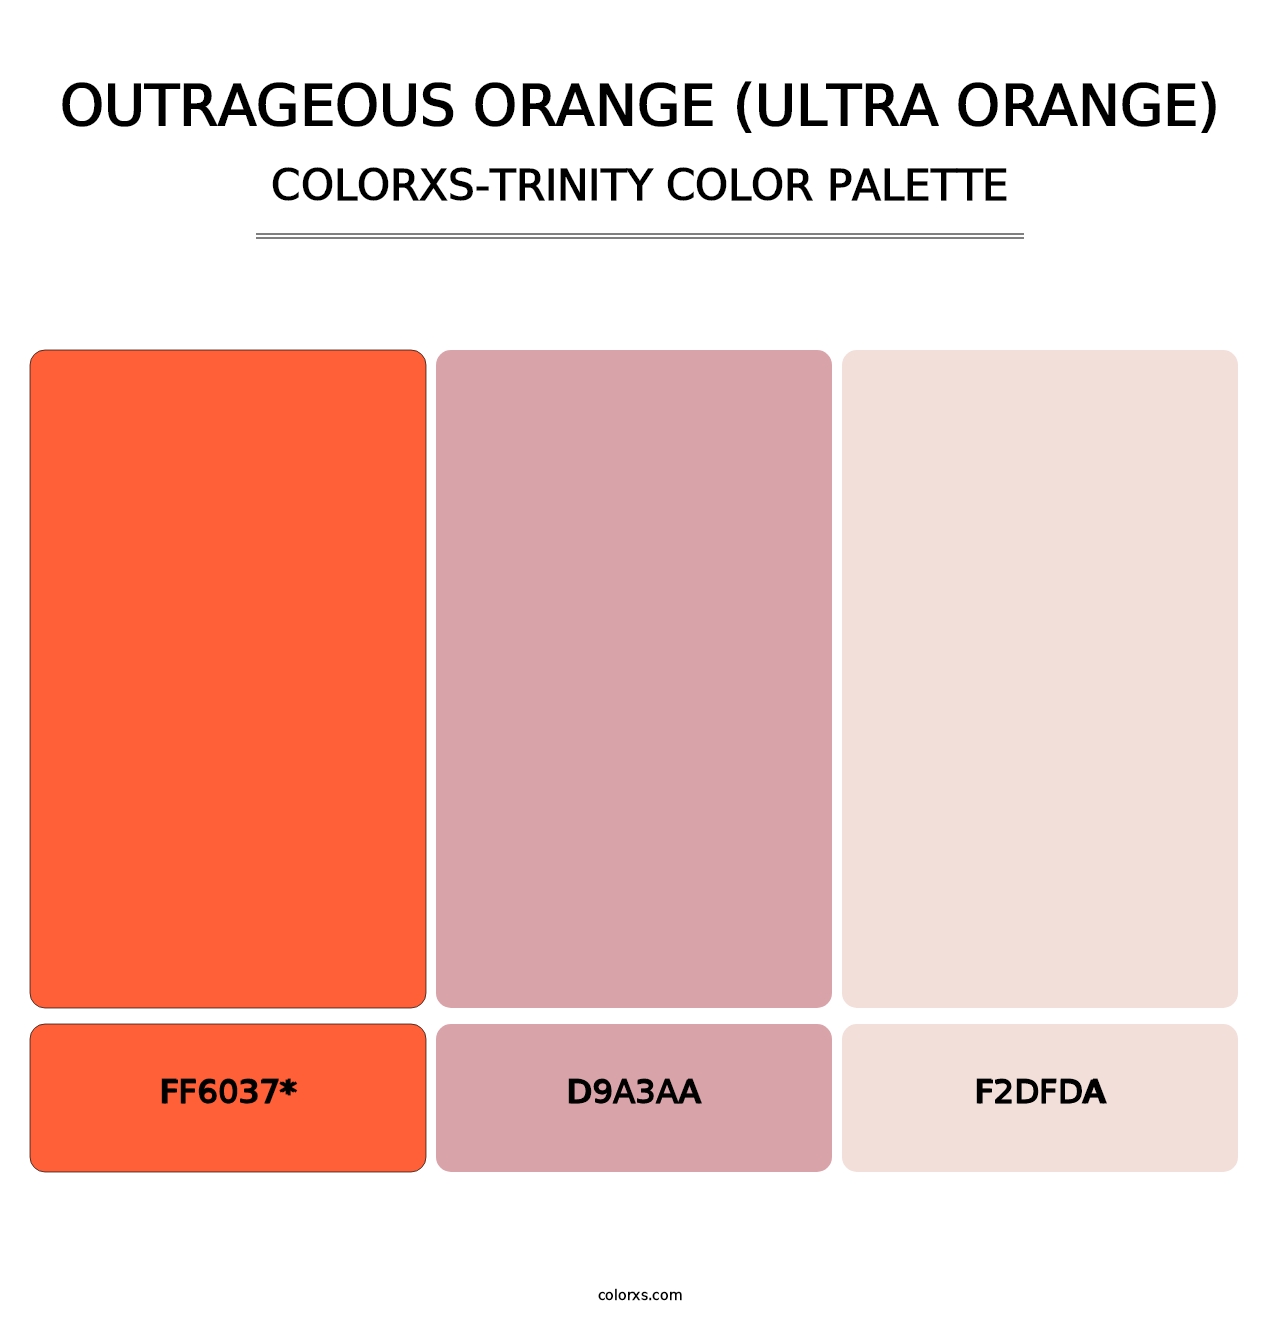 Outrageous Orange (Ultra Orange) - Colorxs Trinity Palette